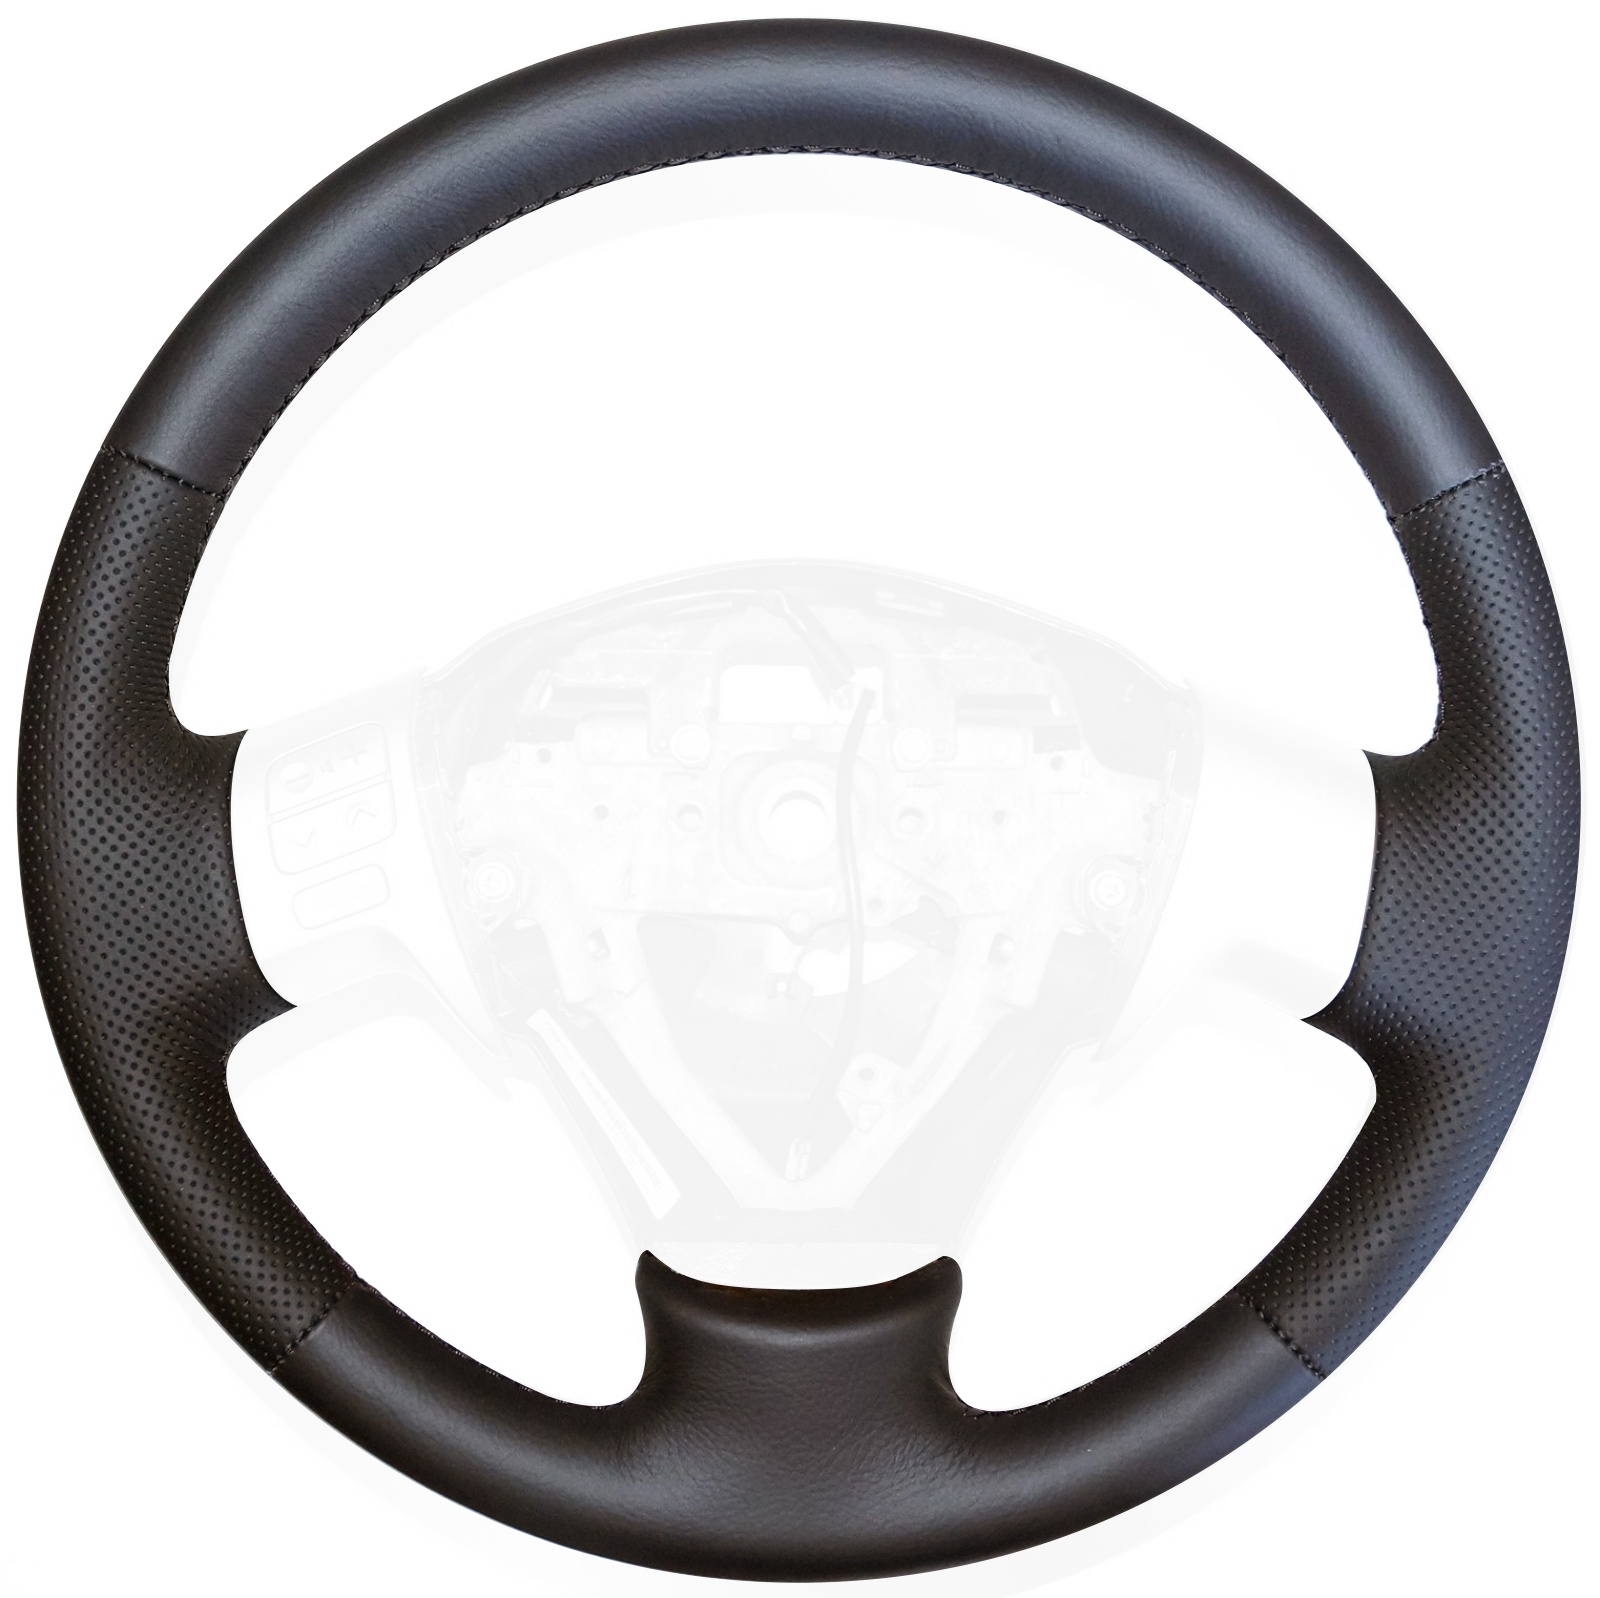 2008-14 Toyota Matrix steering wheel cover (2008-10)